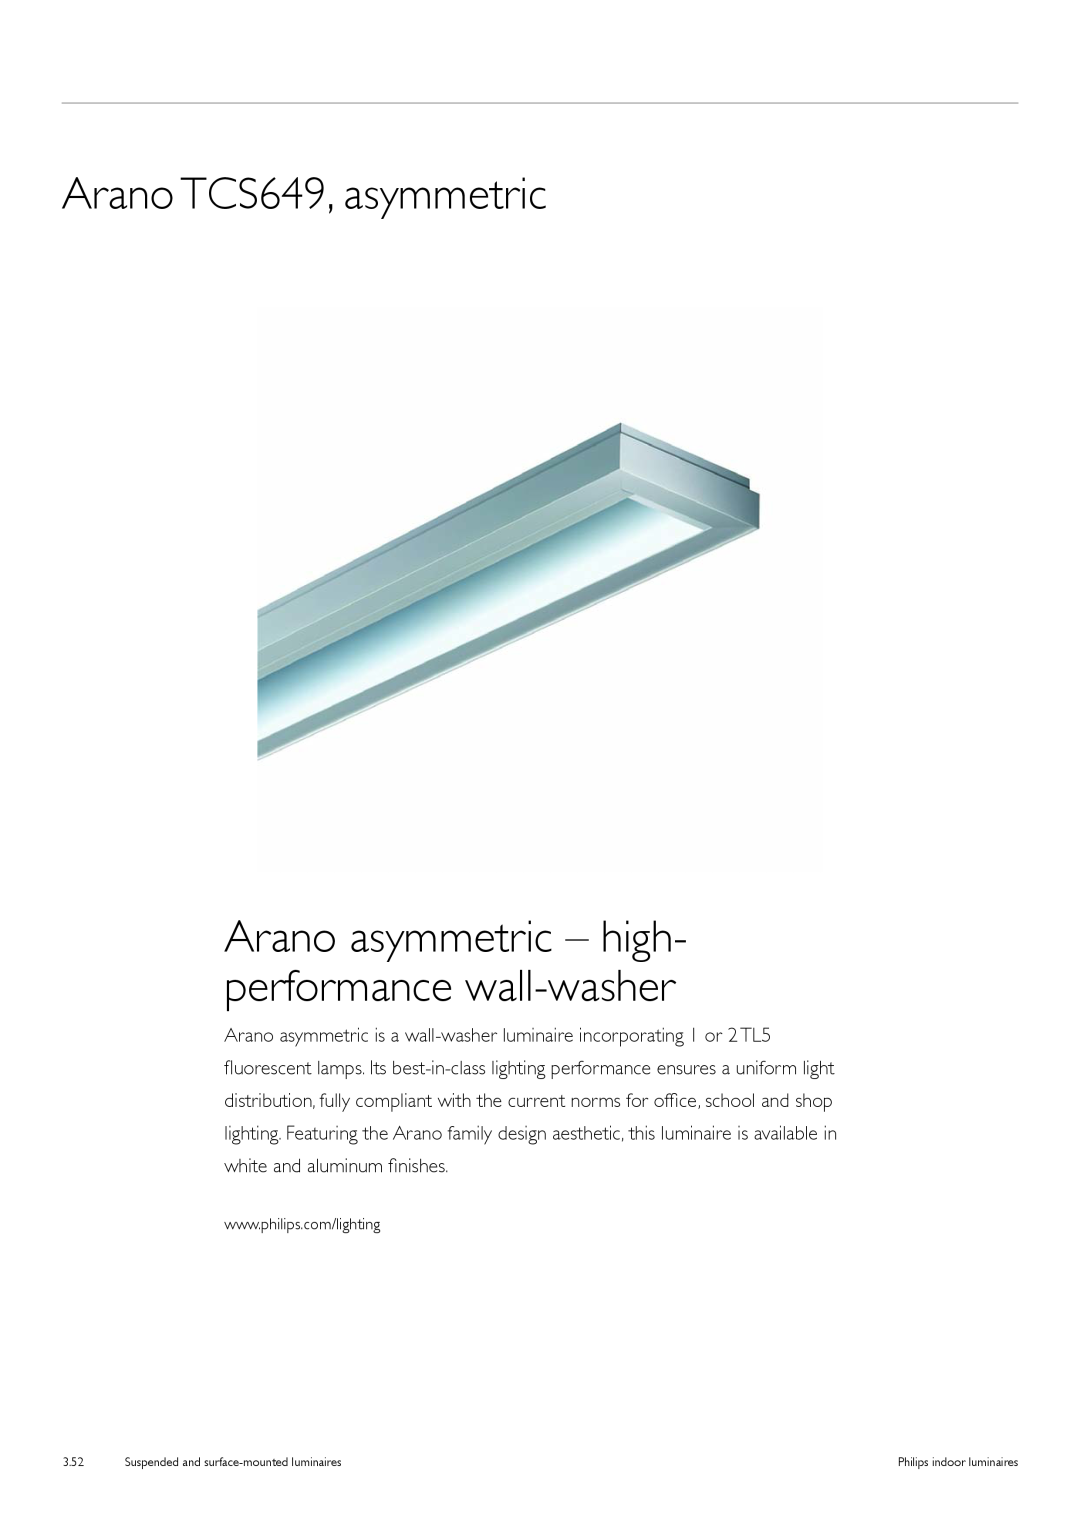 Philips TCS125 manual Arano TCS649, asymmetric, Arano asymmetric – high- performance wall-washer 